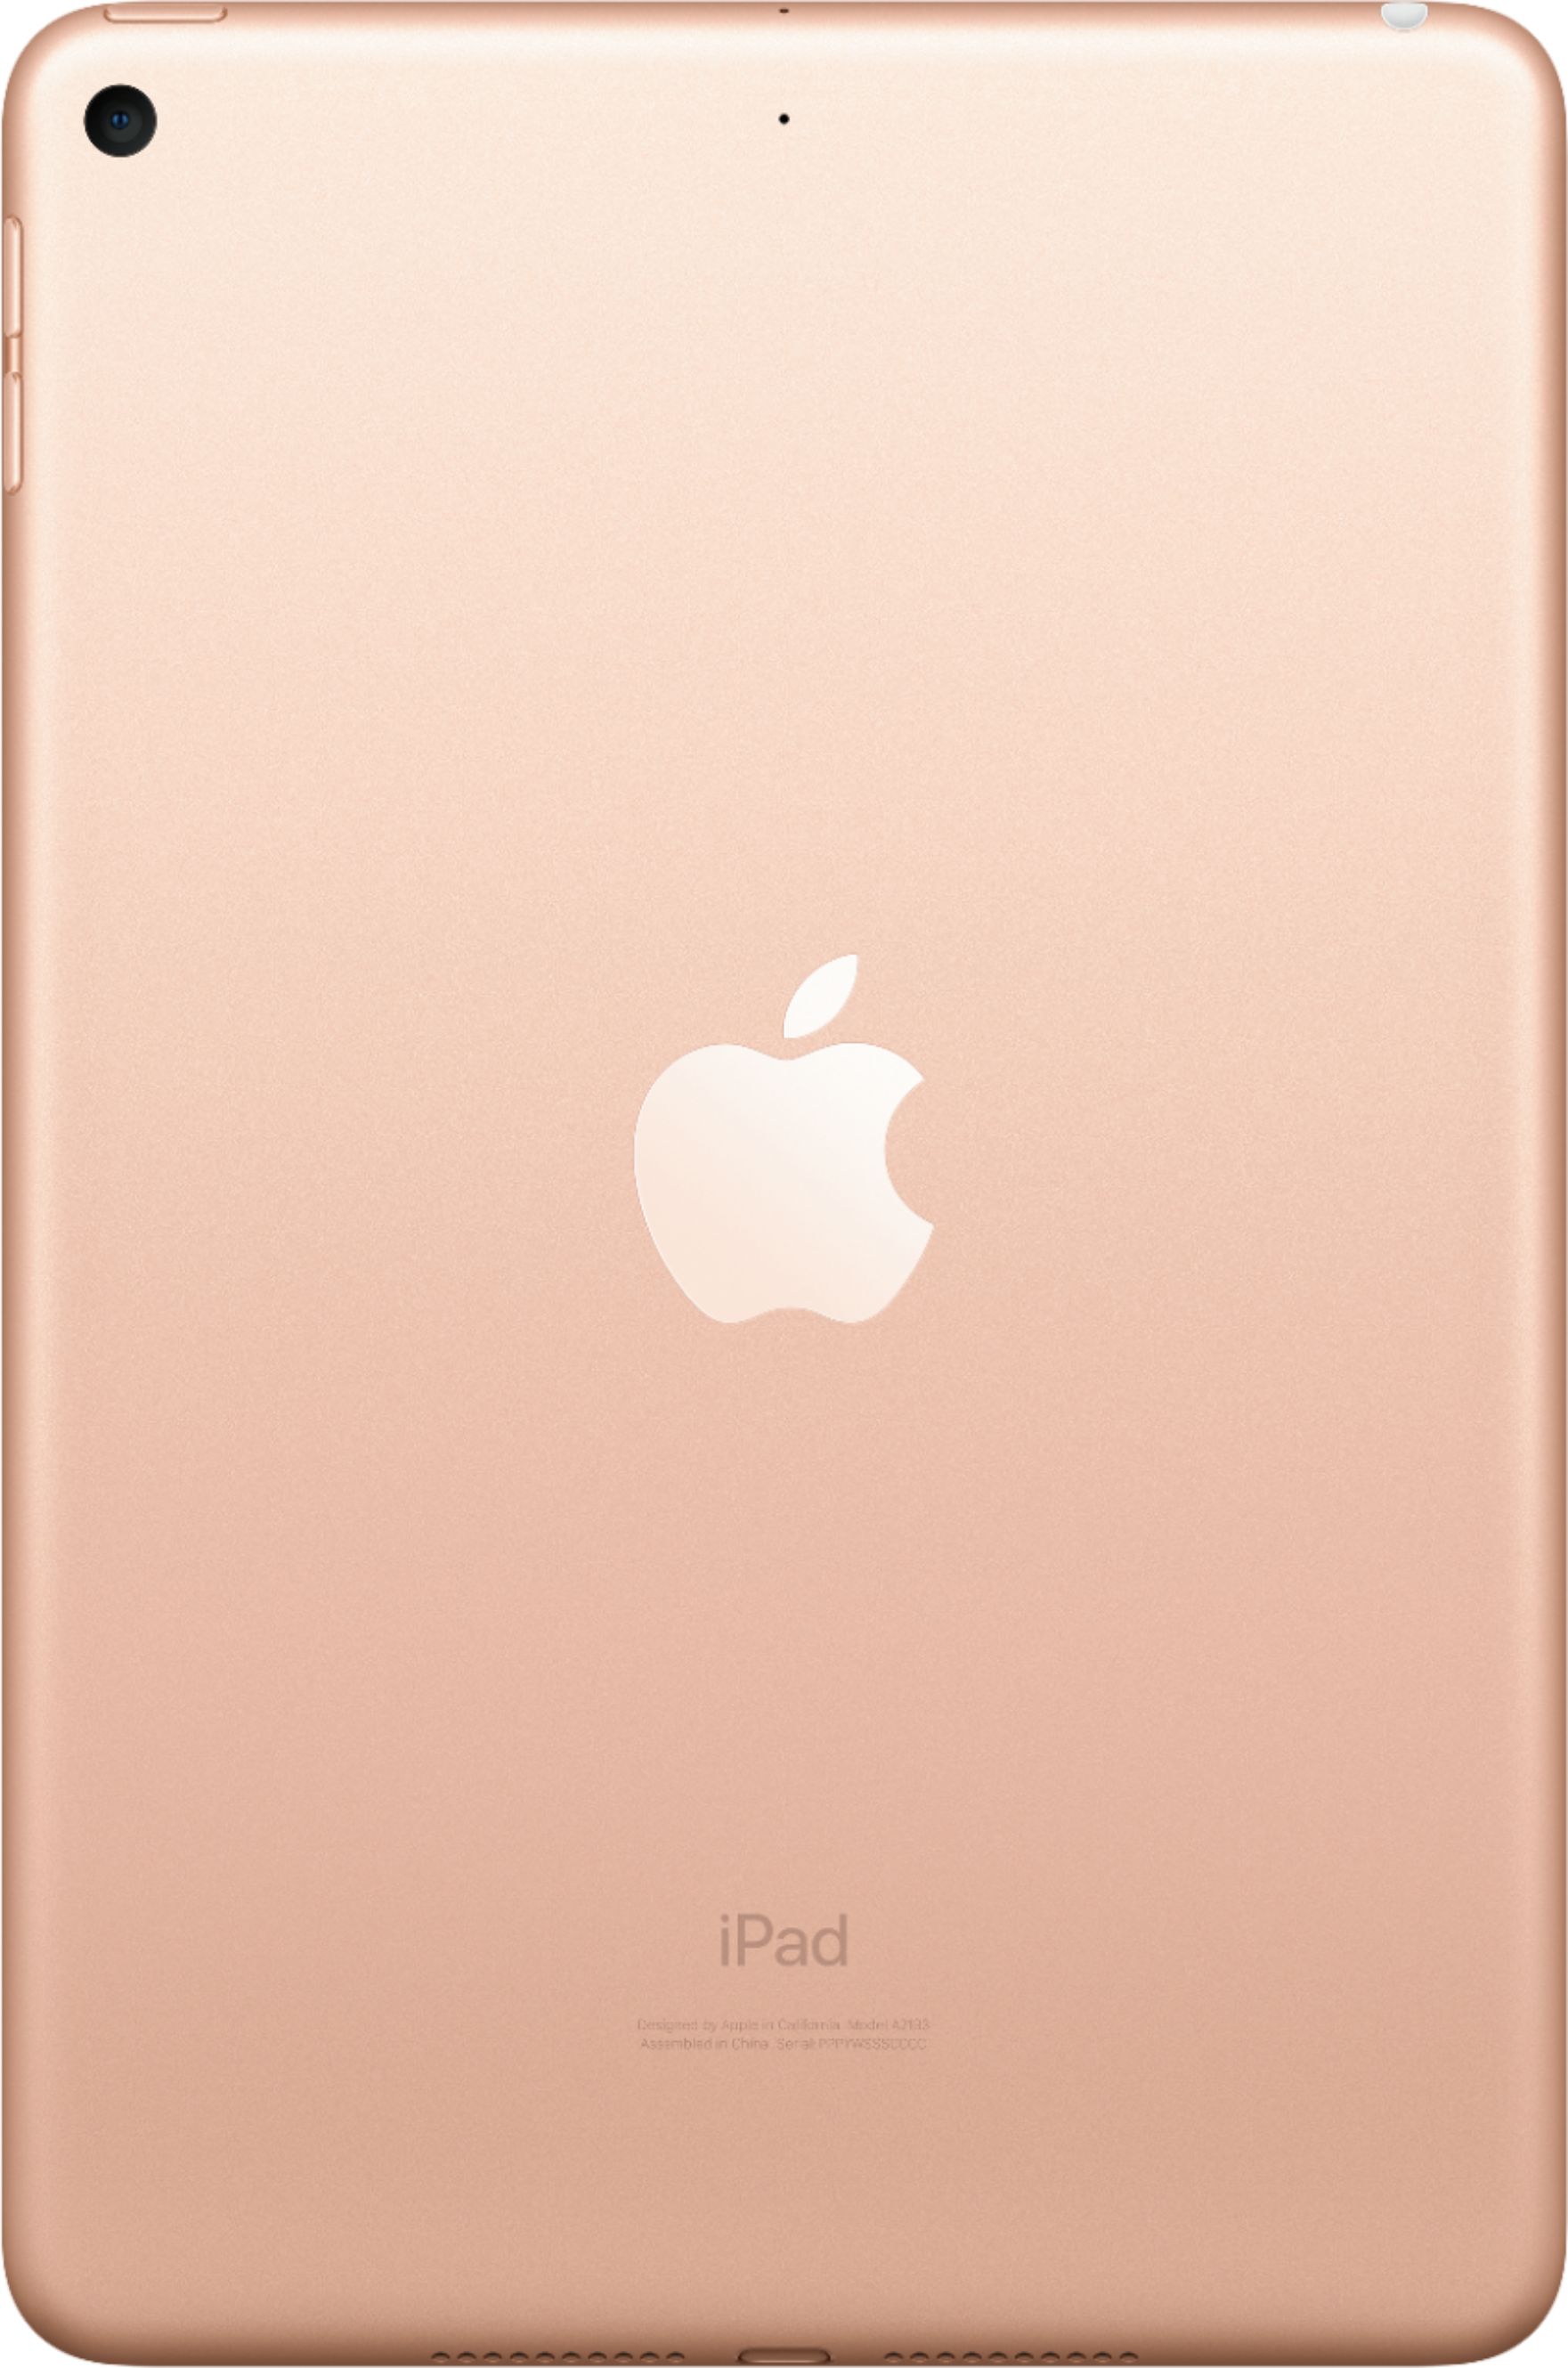 Apple Geek Squad Certified Refurbished 7.9-Inch iPad mini (5th Generation)  with Wi-Fi 64GB Gold GSRF MUQY2LL/A - Best Buy